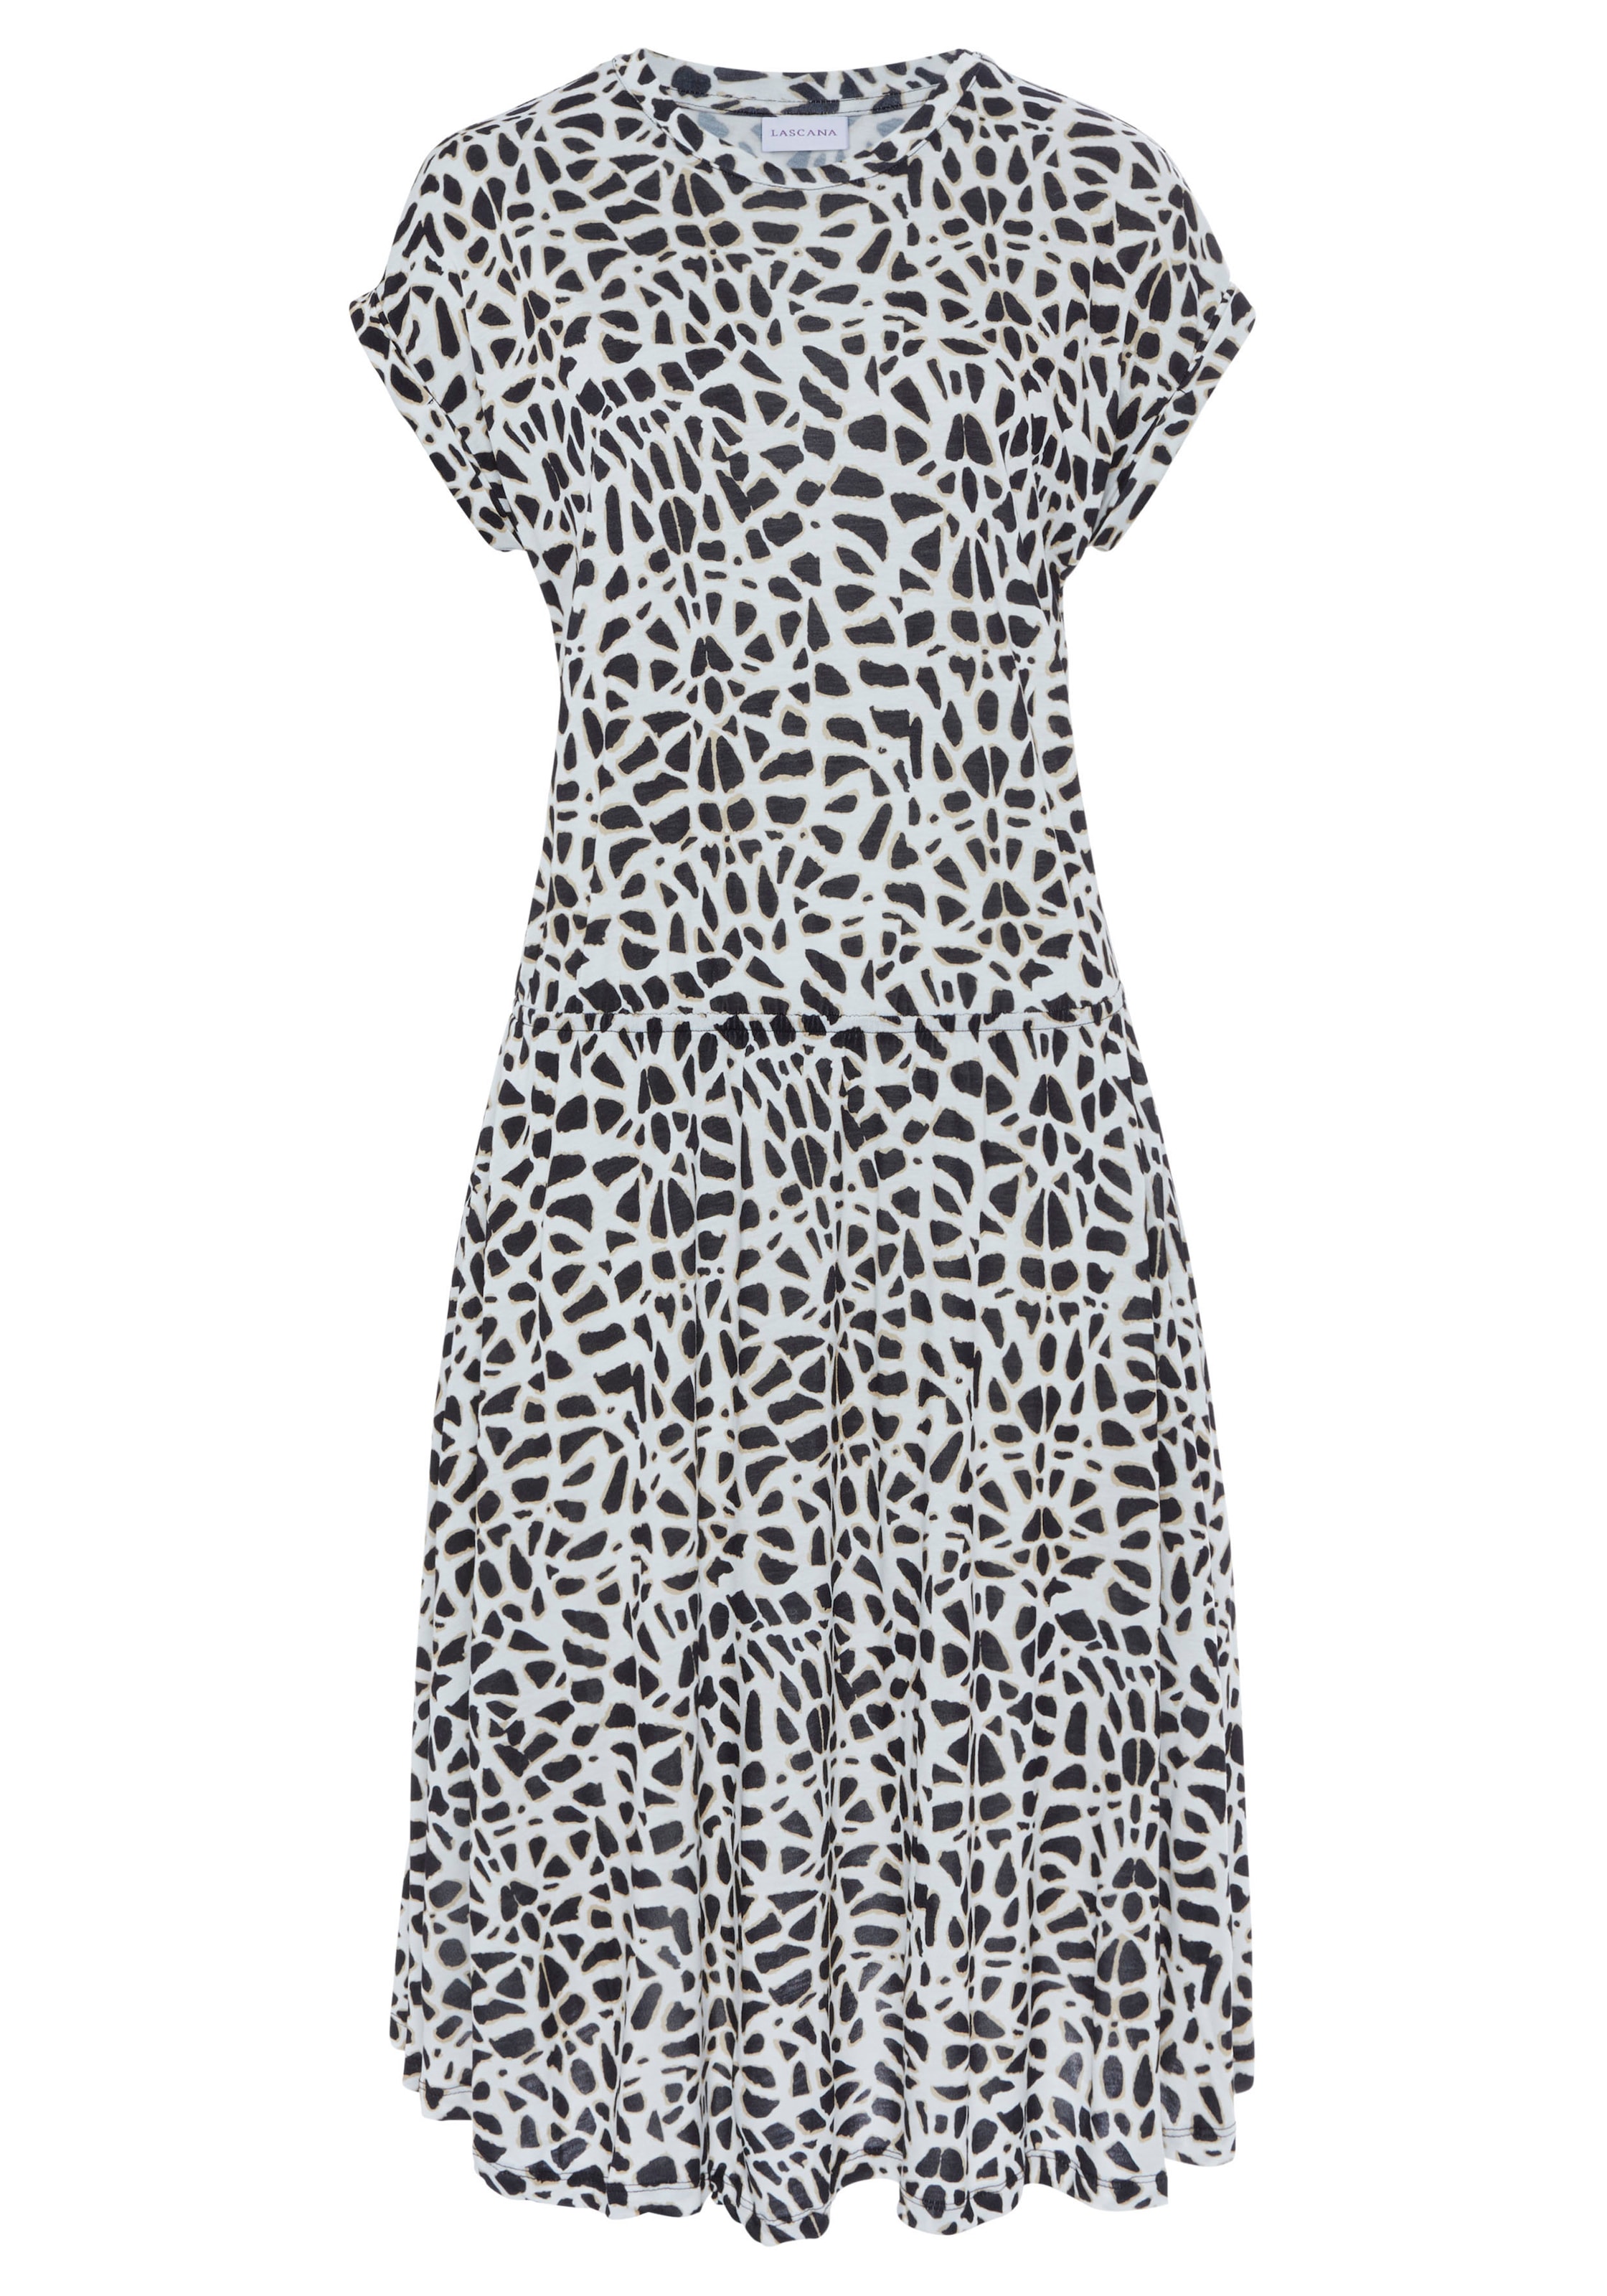 LASCANA Jerseykleid, mit Animalprint, kurzärmliges Sommerkleid, casual-chic